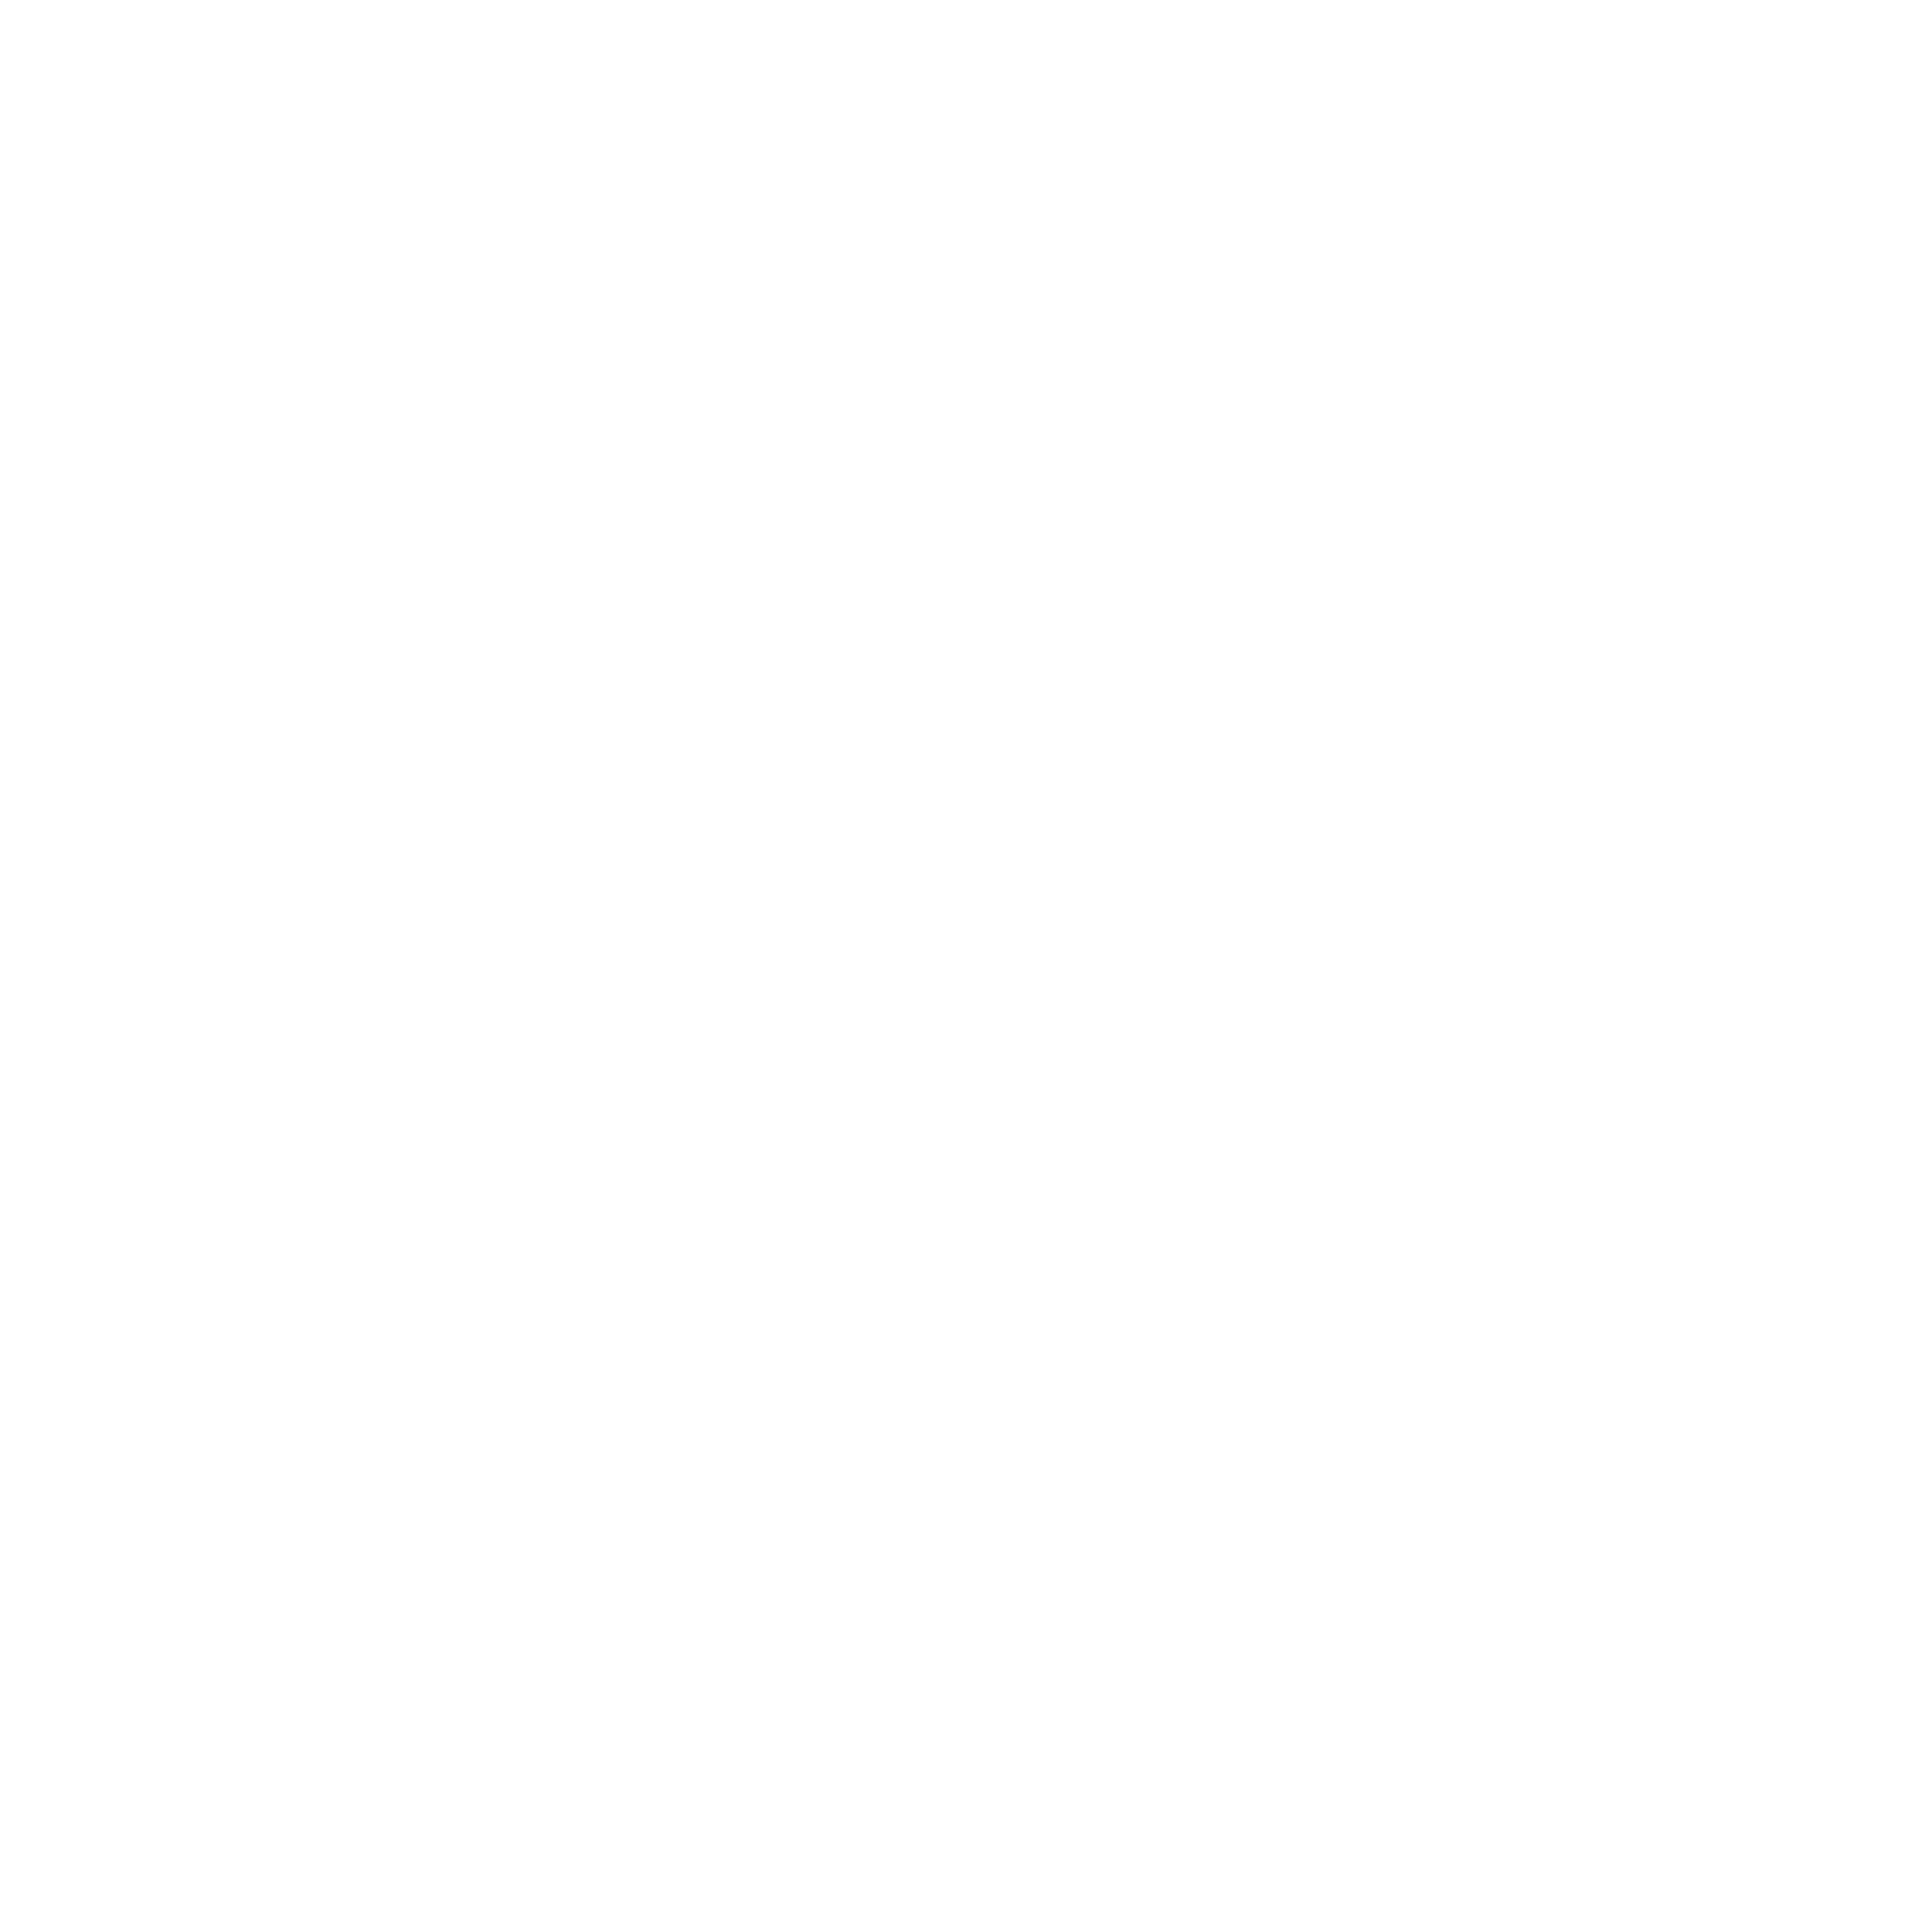 The Art of Wayfaring